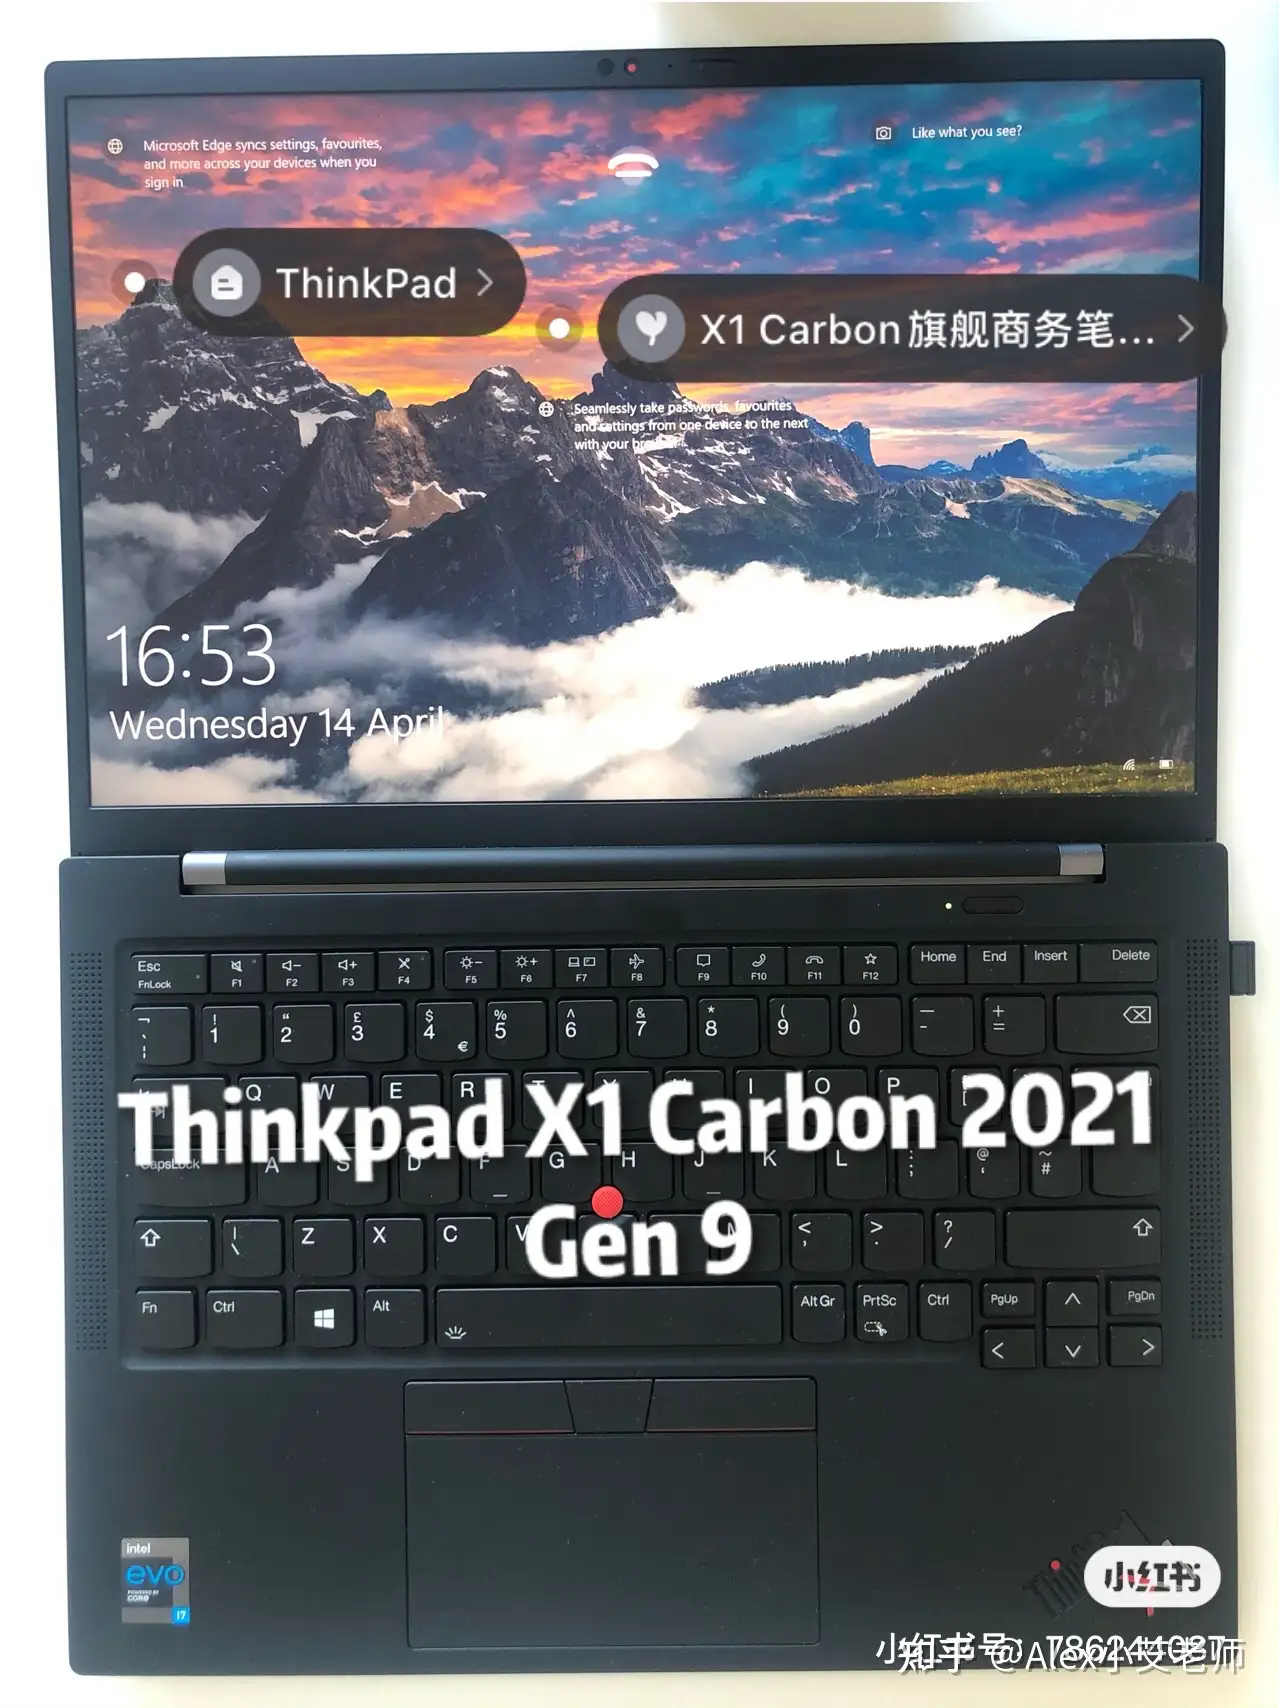 Thinkpad X1 Carbon 2021选择4K还是1080p？ - 知乎